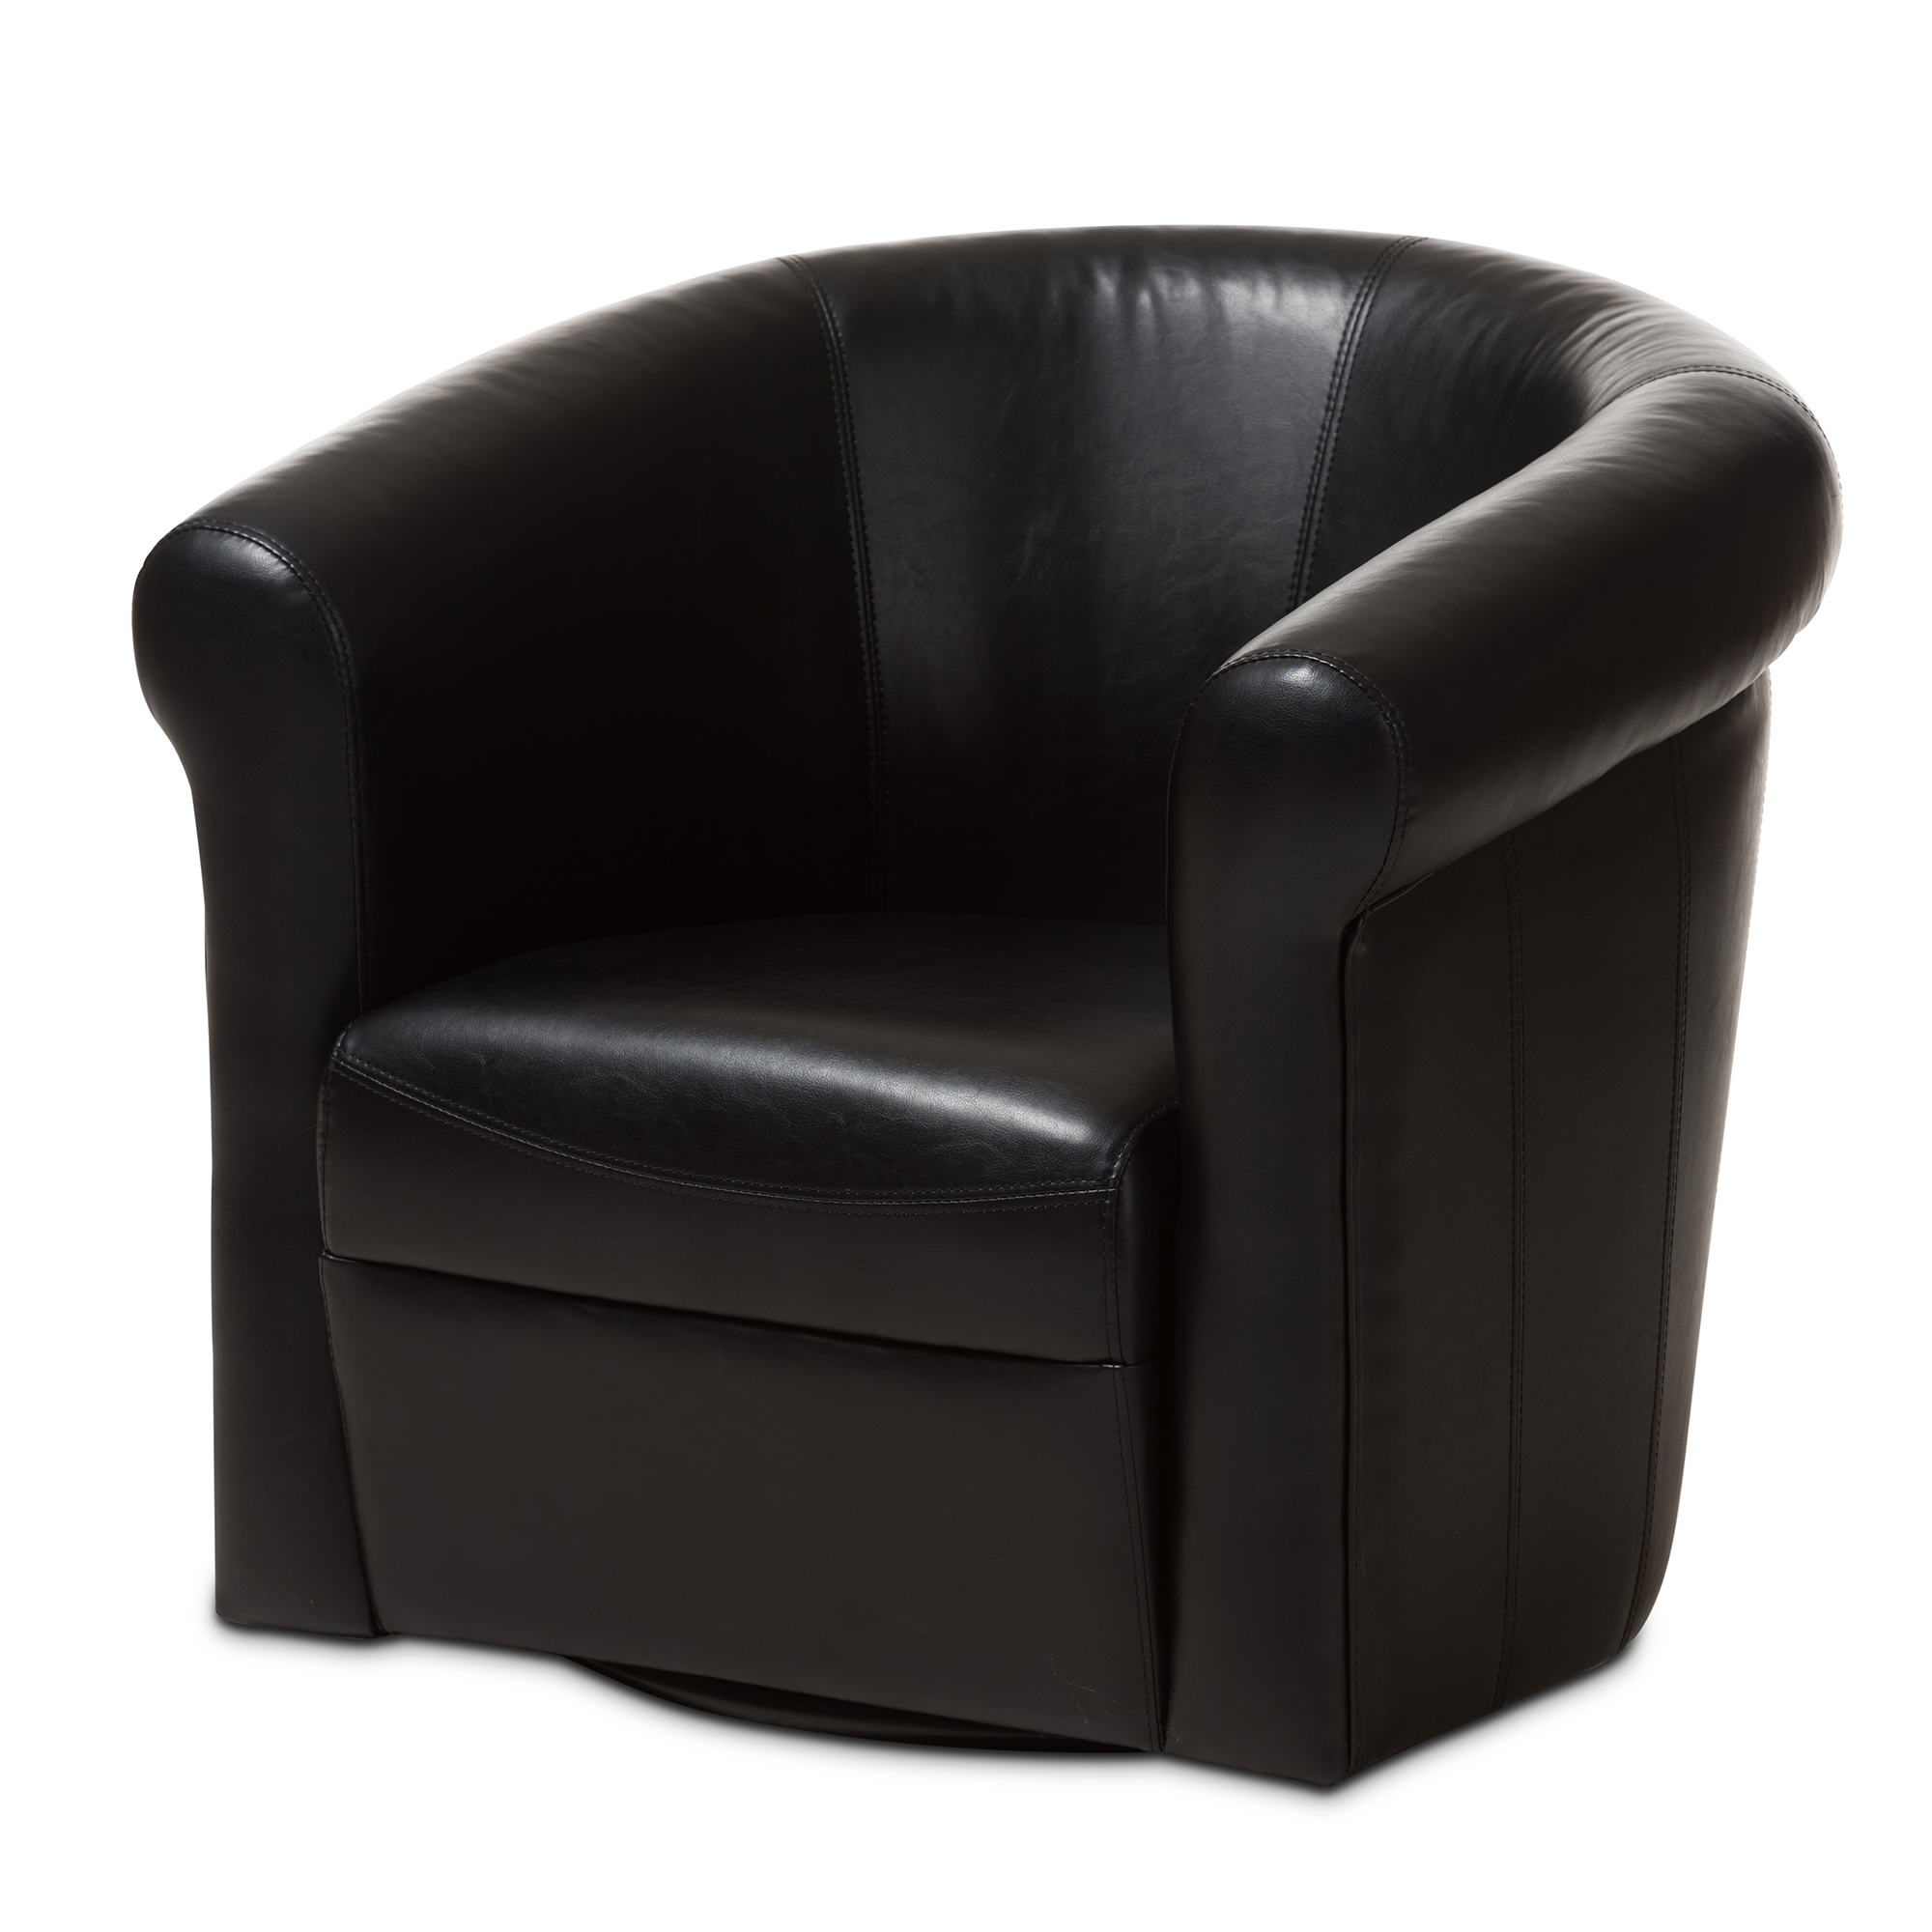 Baxton Studio Julian Black Faux Leather Club Chair with